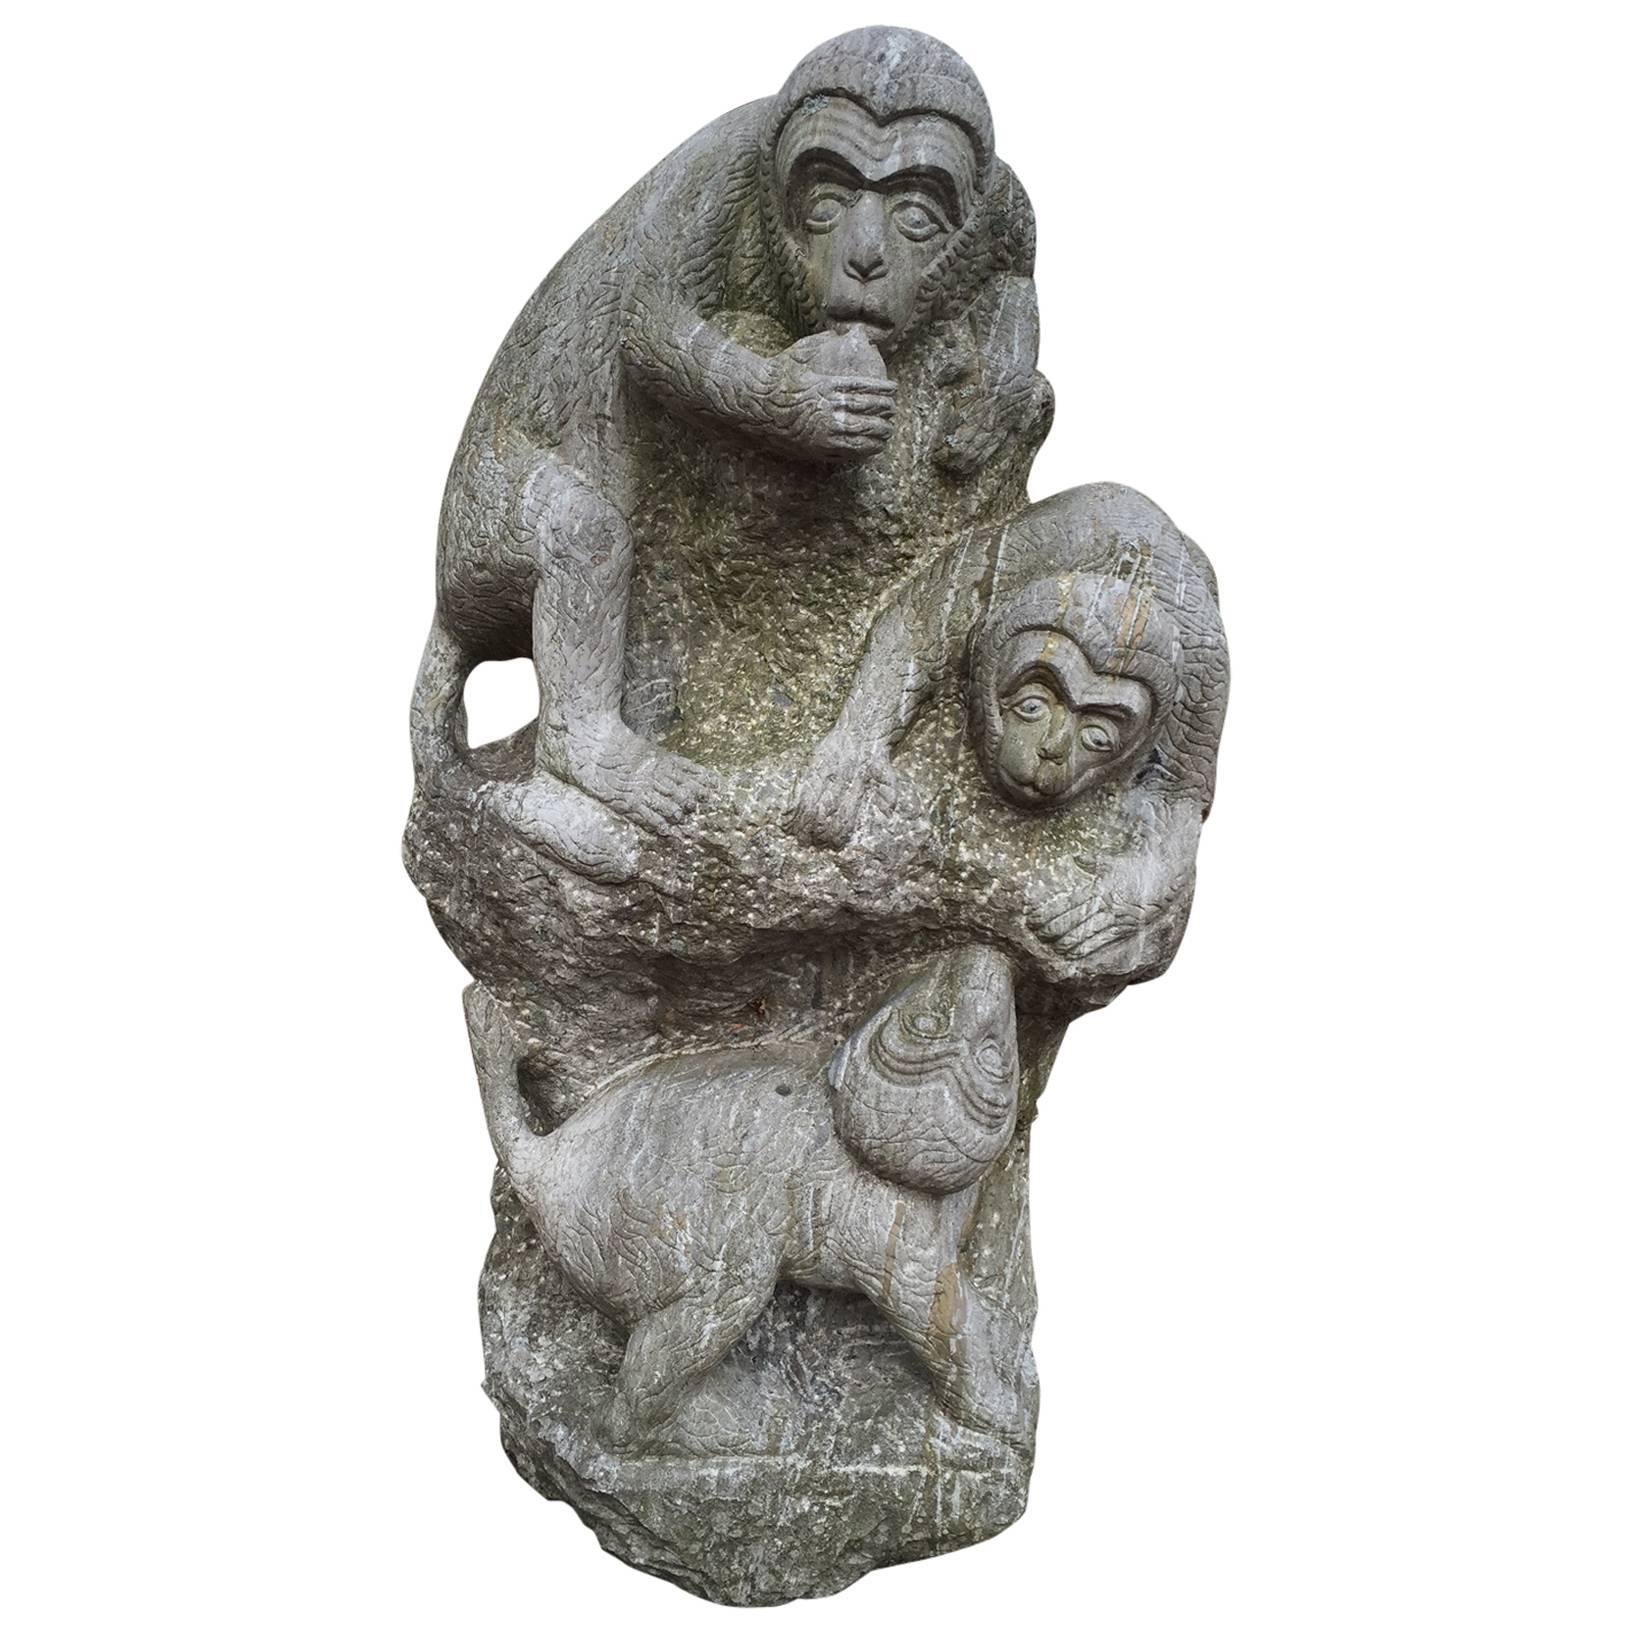 Monumental Hand-Carved Stone Sculpture "Monkey Mountain" Playful Monkeys